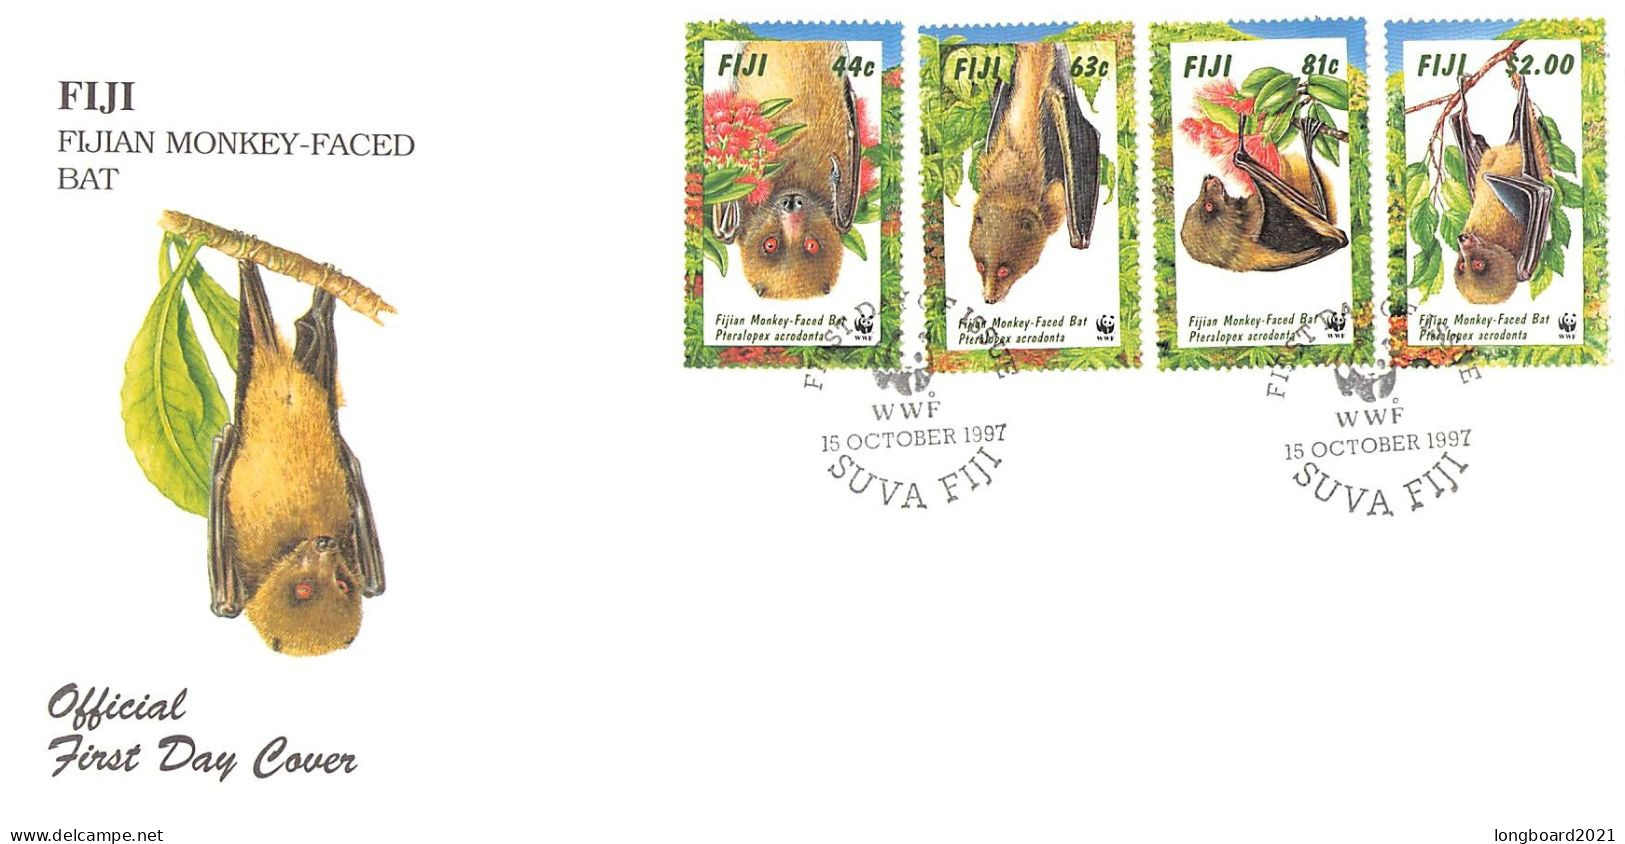 FIJI - FDC WWF 1997 - BATS / 4184 - Fiji (1970-...)